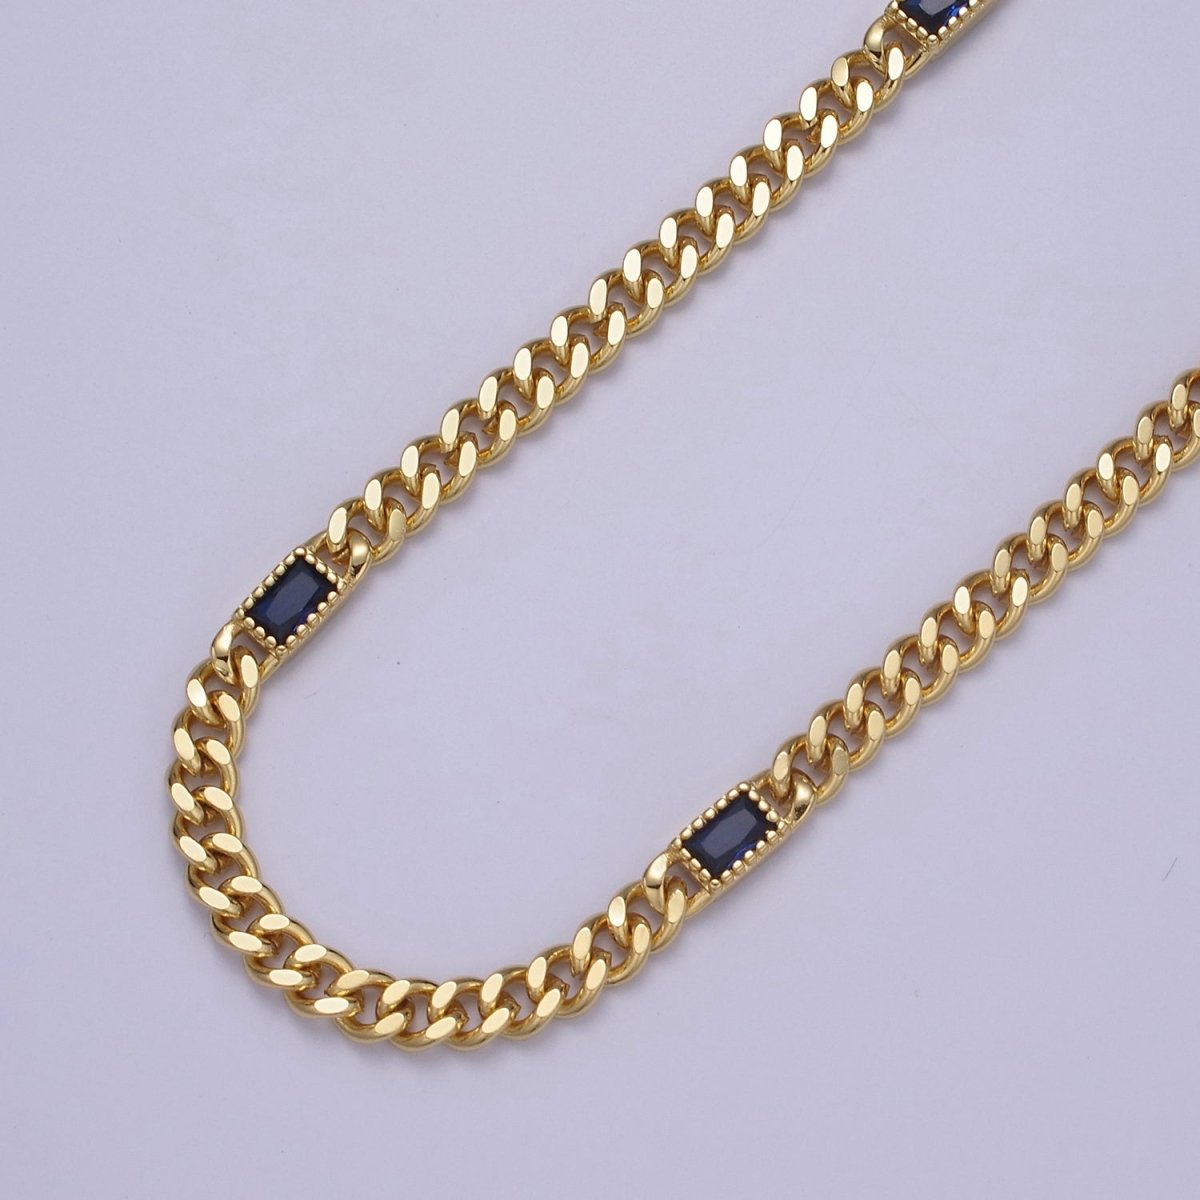 Chunky curb chain with Clear CZ Stone for Necklace Bracelet Statement Jewelry | WA-1373 - WA-1377 WA-1405 Clearance Pricing - DLUXCA